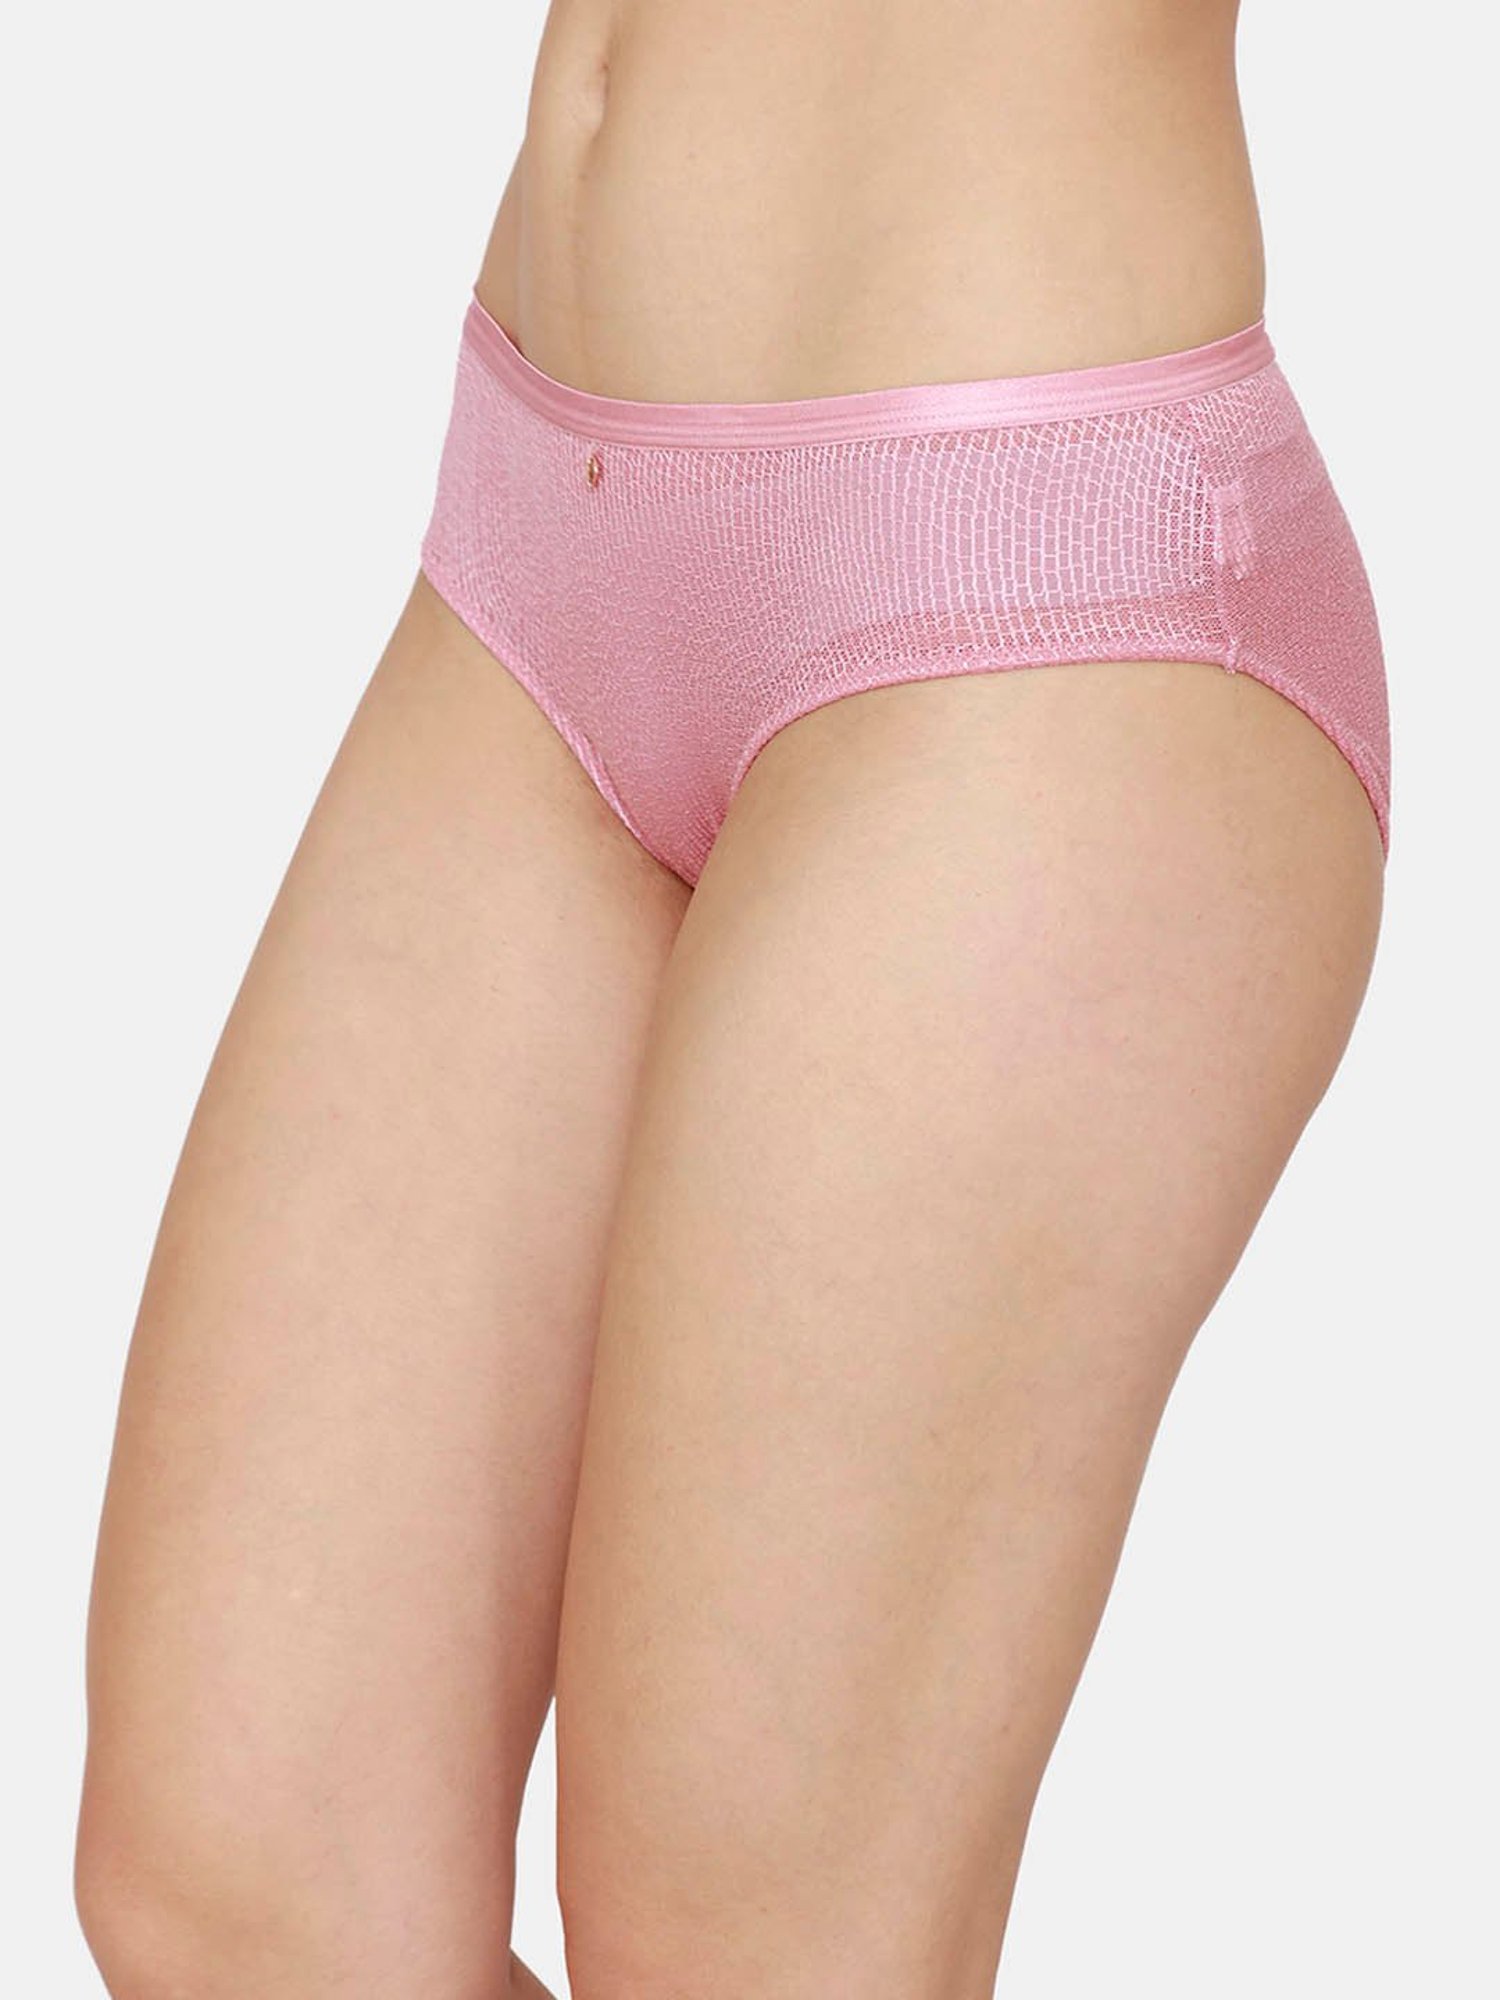 Buy Pink Panties for Women by Zivame Online